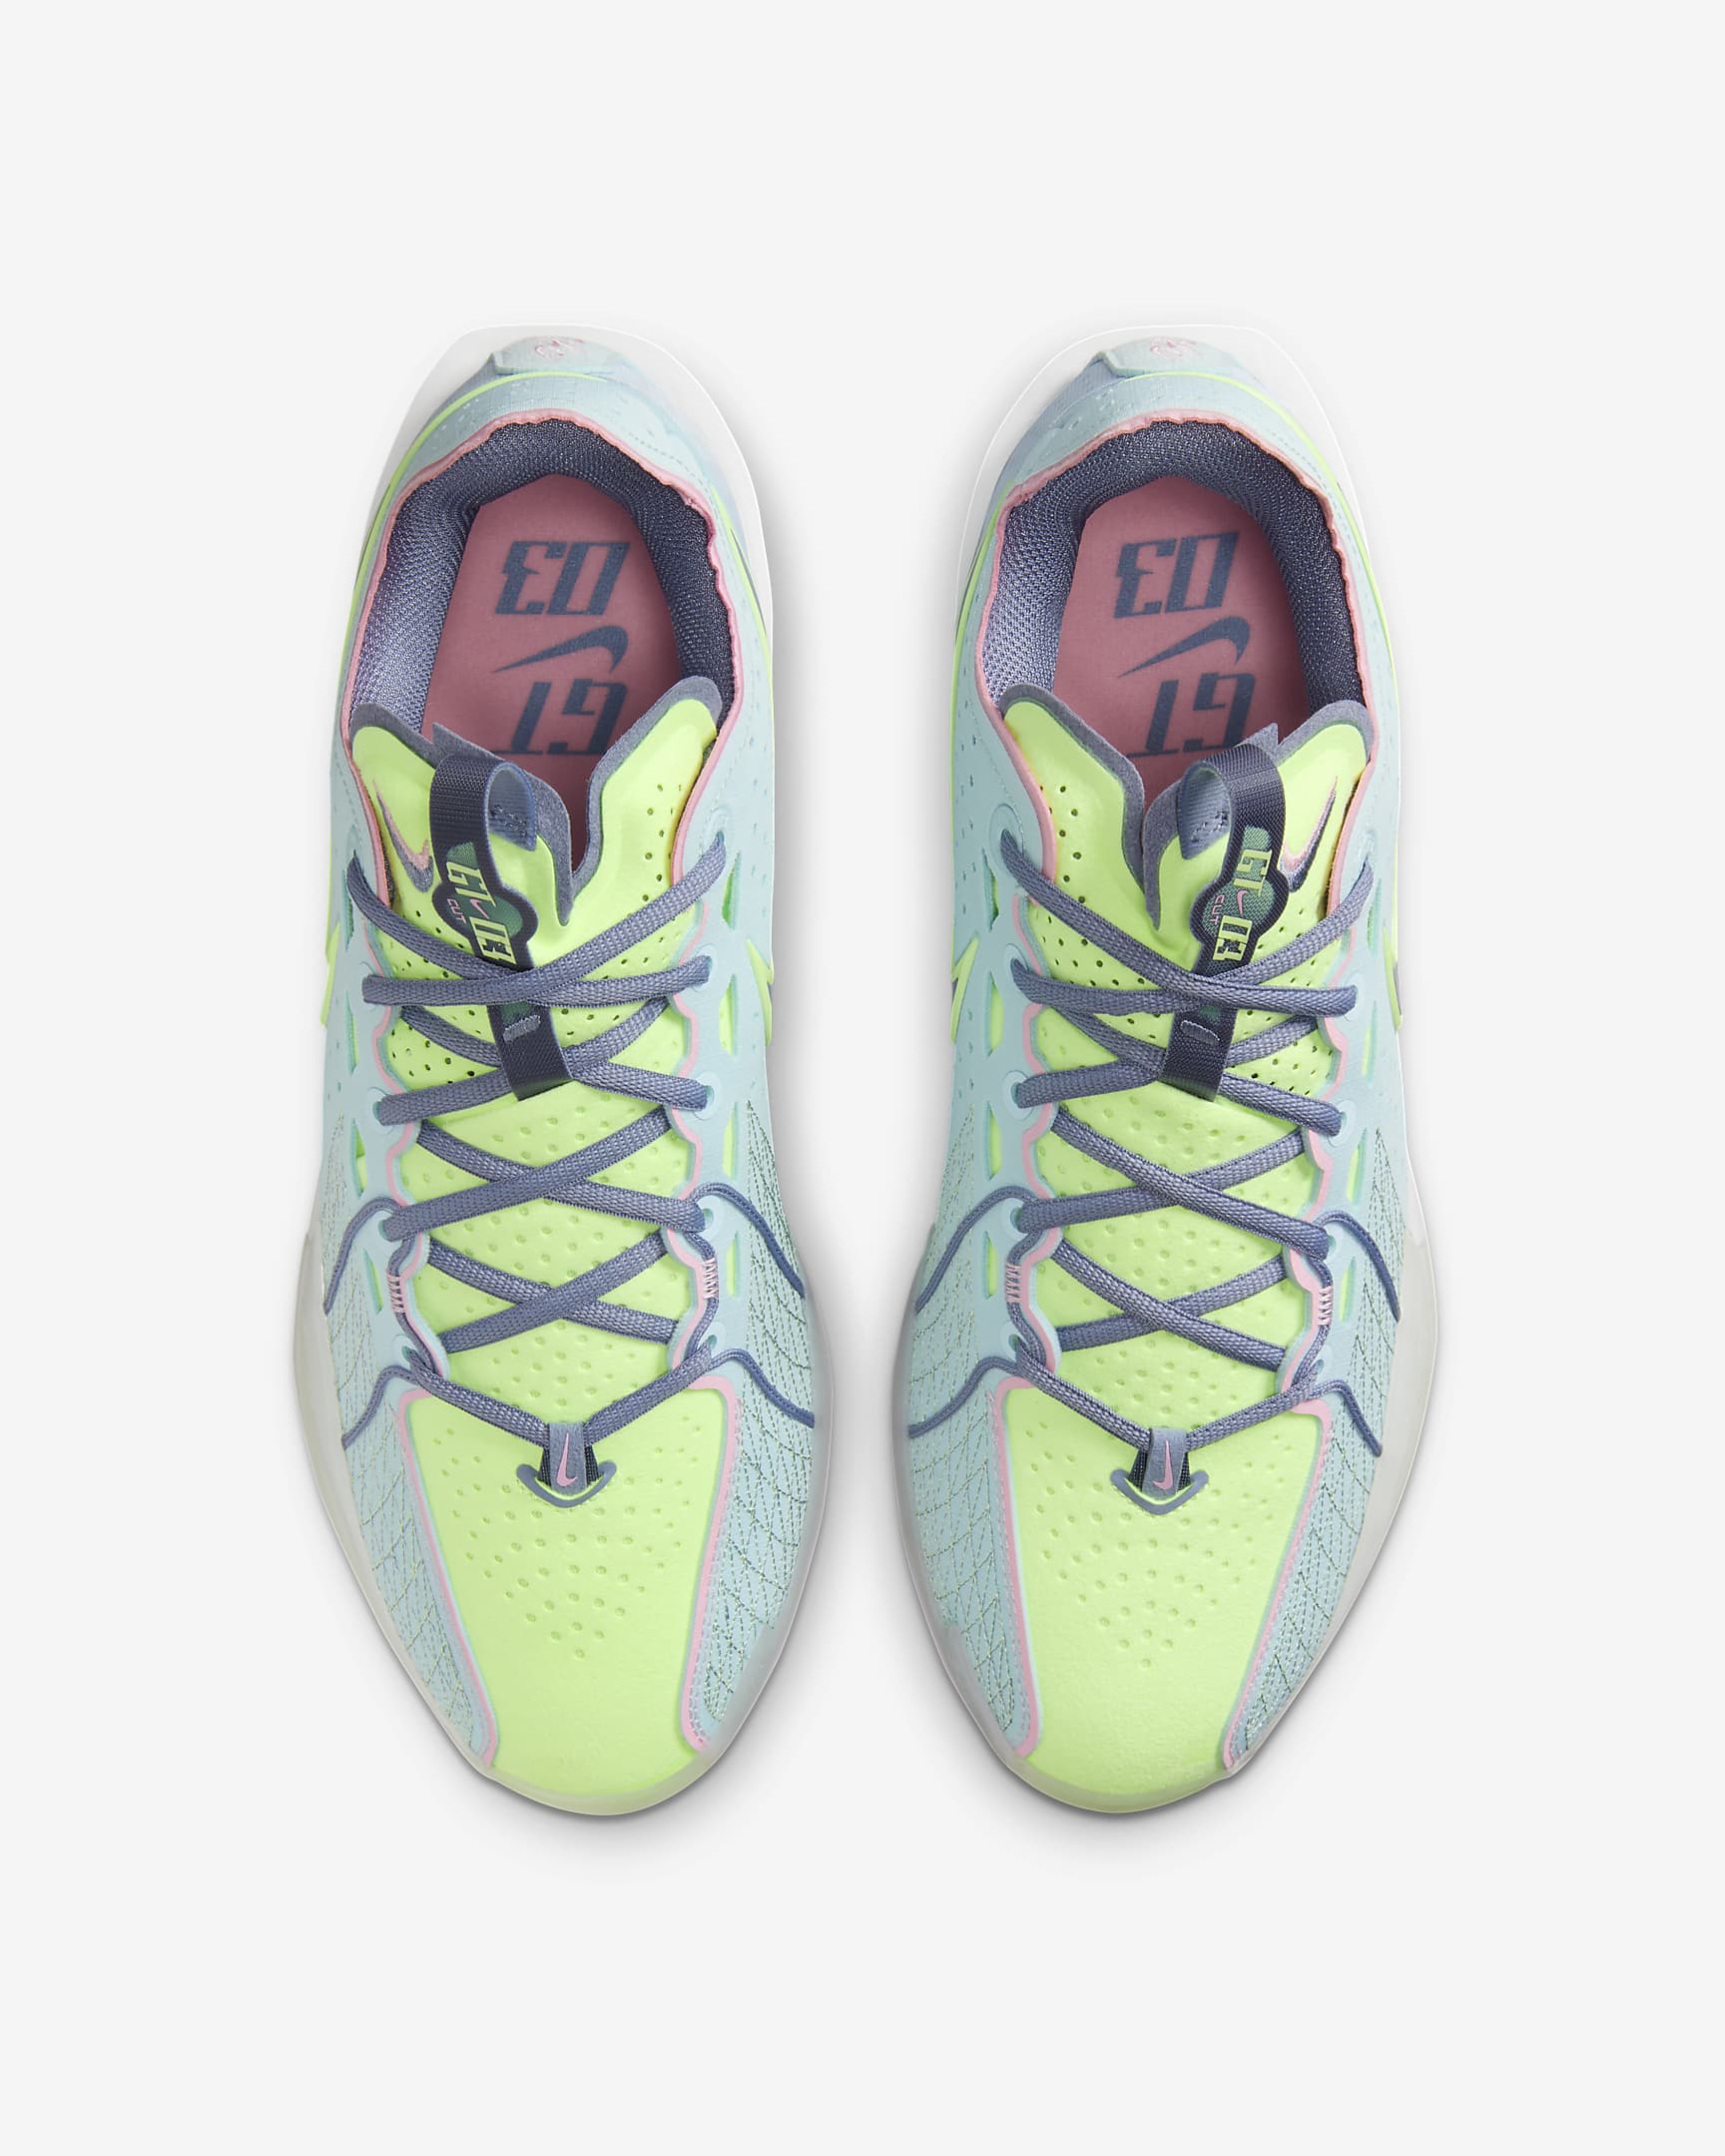 Nike G.T. Cut 3 Basketball Shoes - Glacier Blue/Bright Mandarin/Ashen Slate/Light Armory Blue